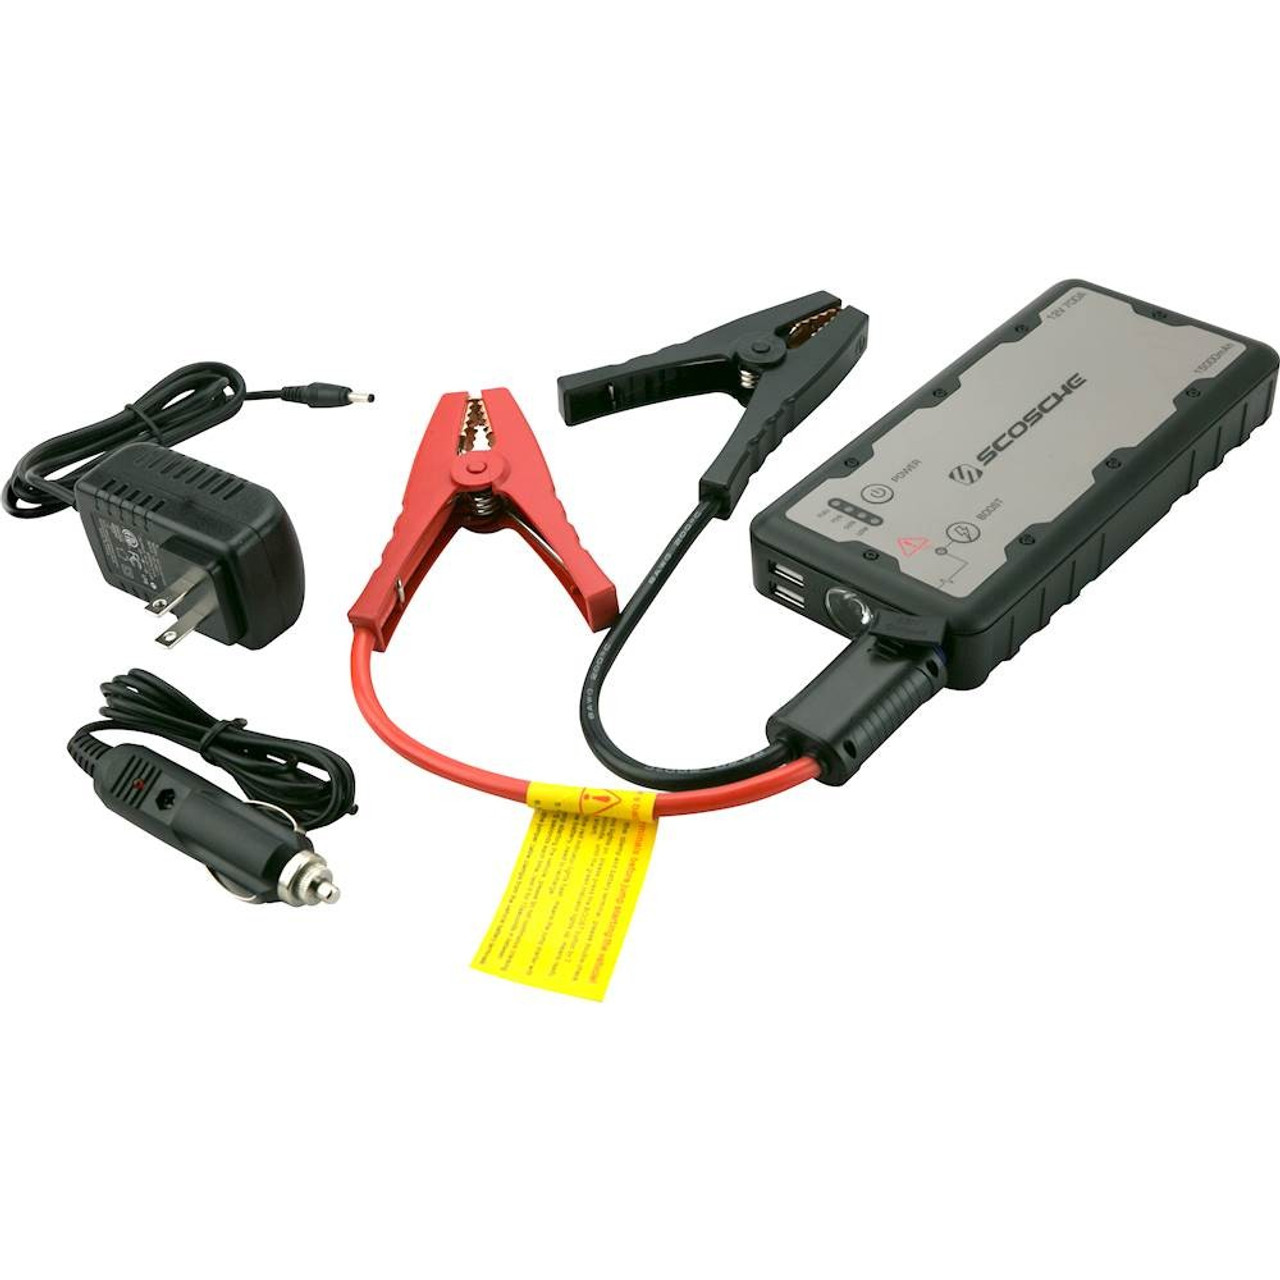 Scosche - Portable Car Jump Starter with USB Power Bank - Gray